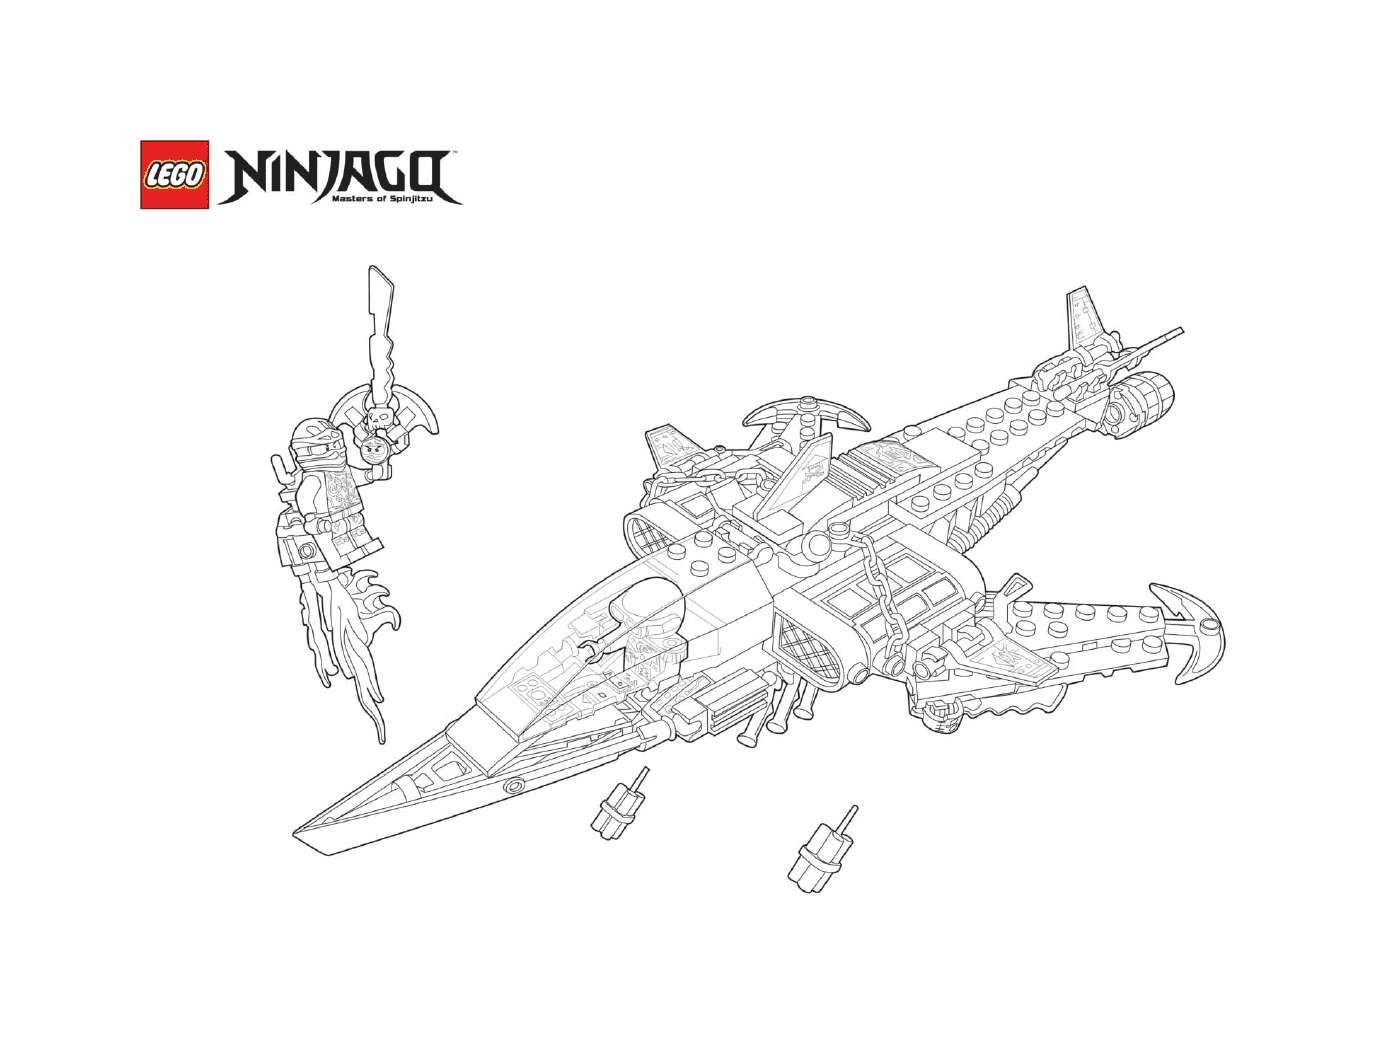   Ninjago vaisseau maudit 